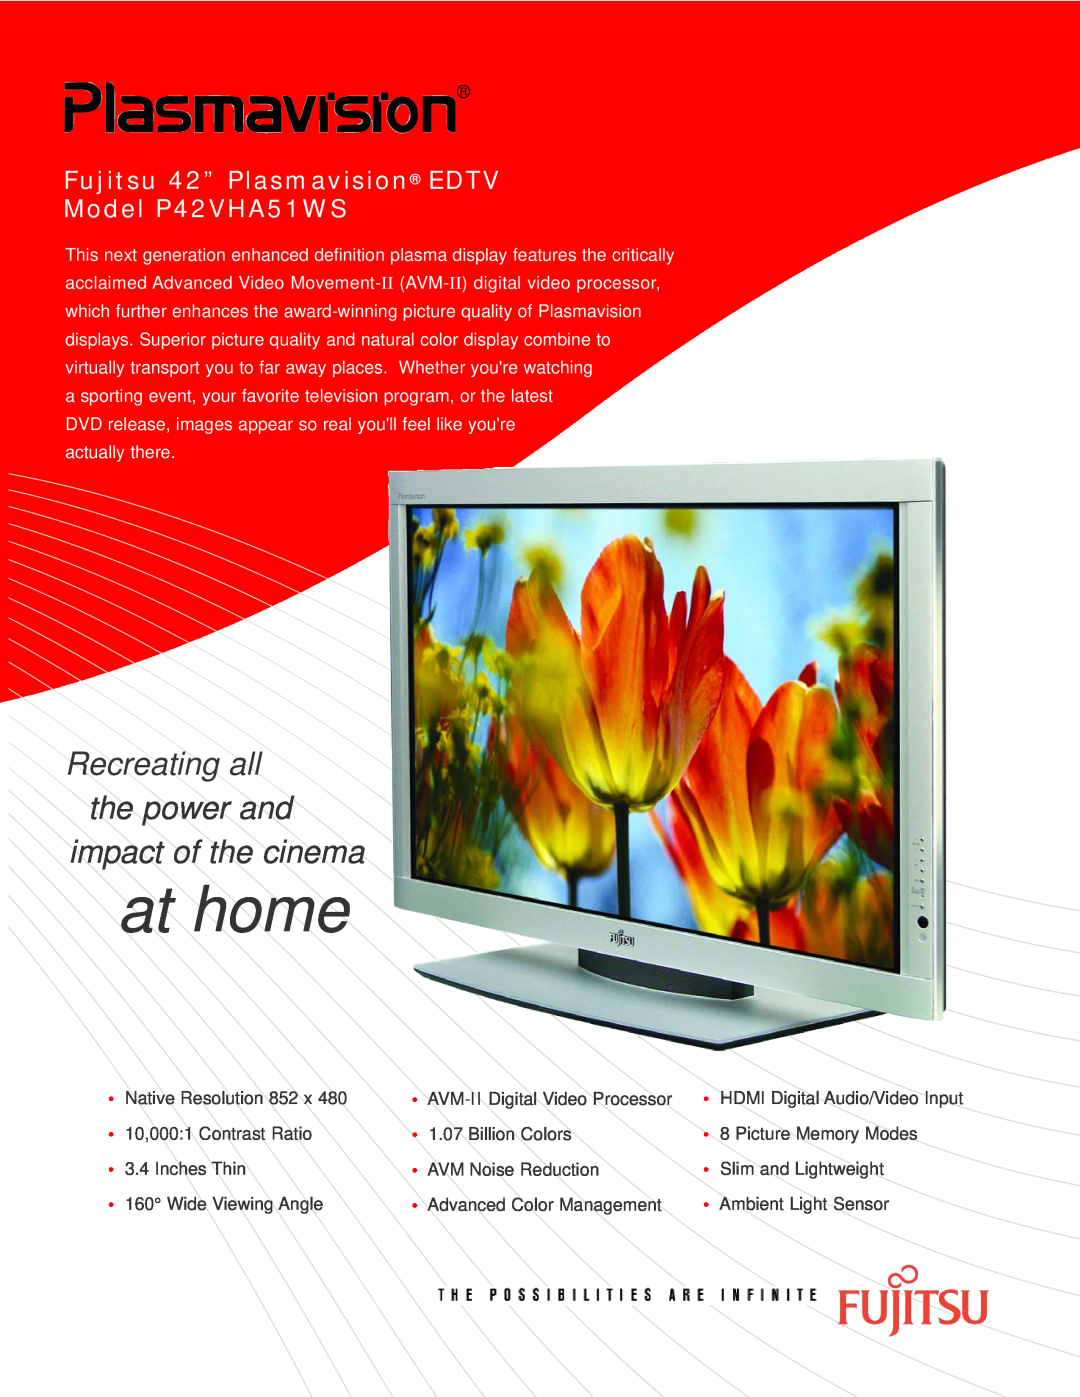 Fujitsu P42VHA51WS manual at home, Recreating all the power and impact of the cinema 